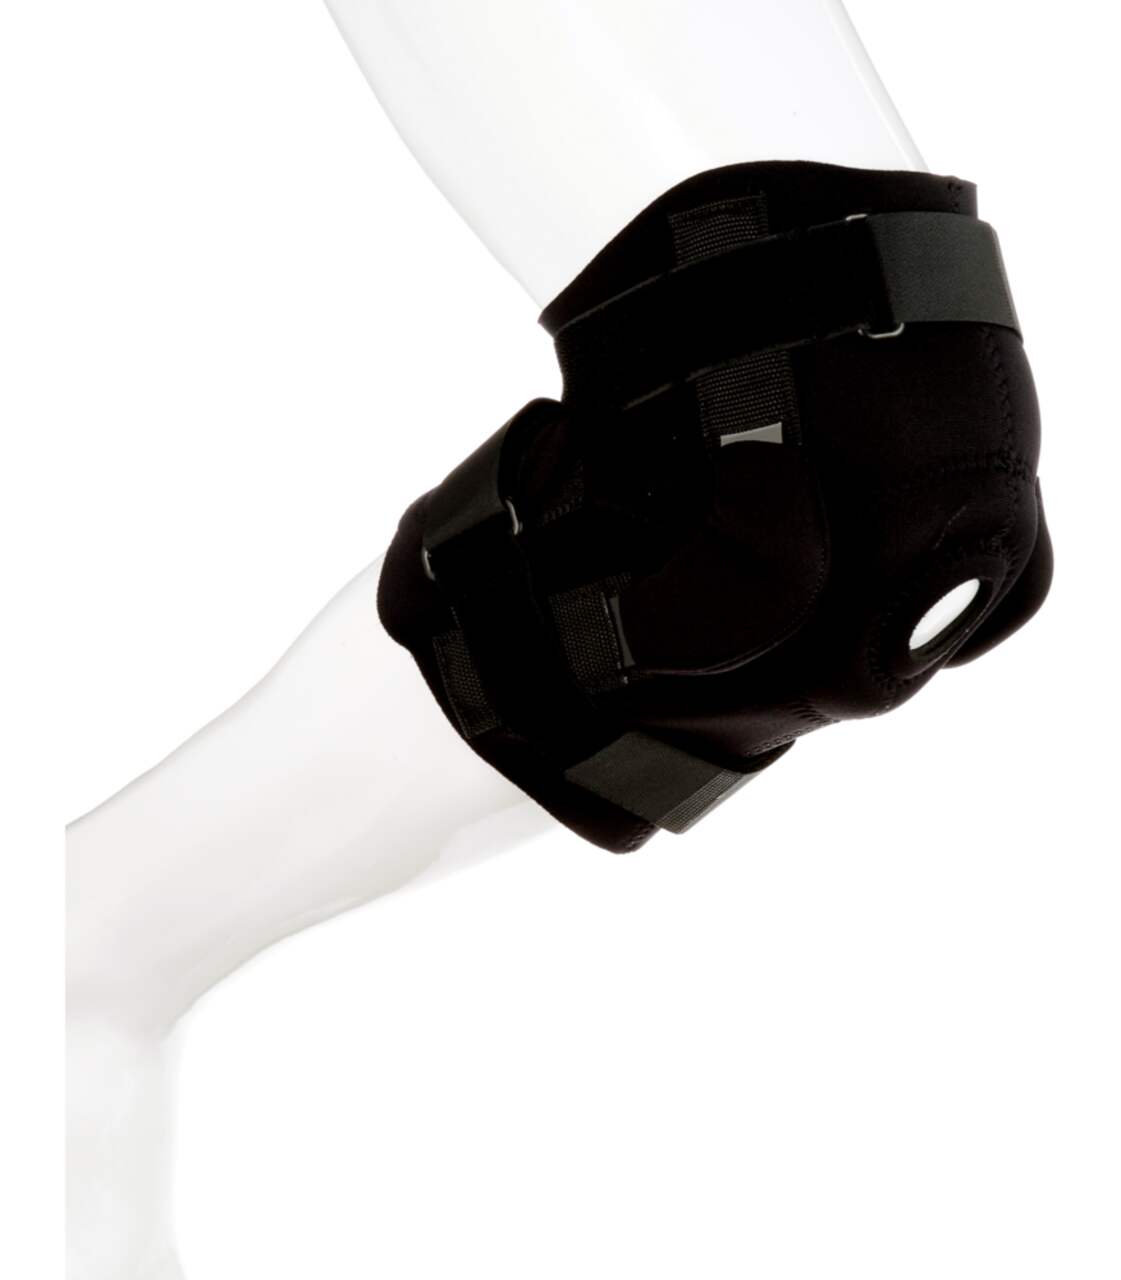 Tensor Hinged Adjustable Knee Support, Black